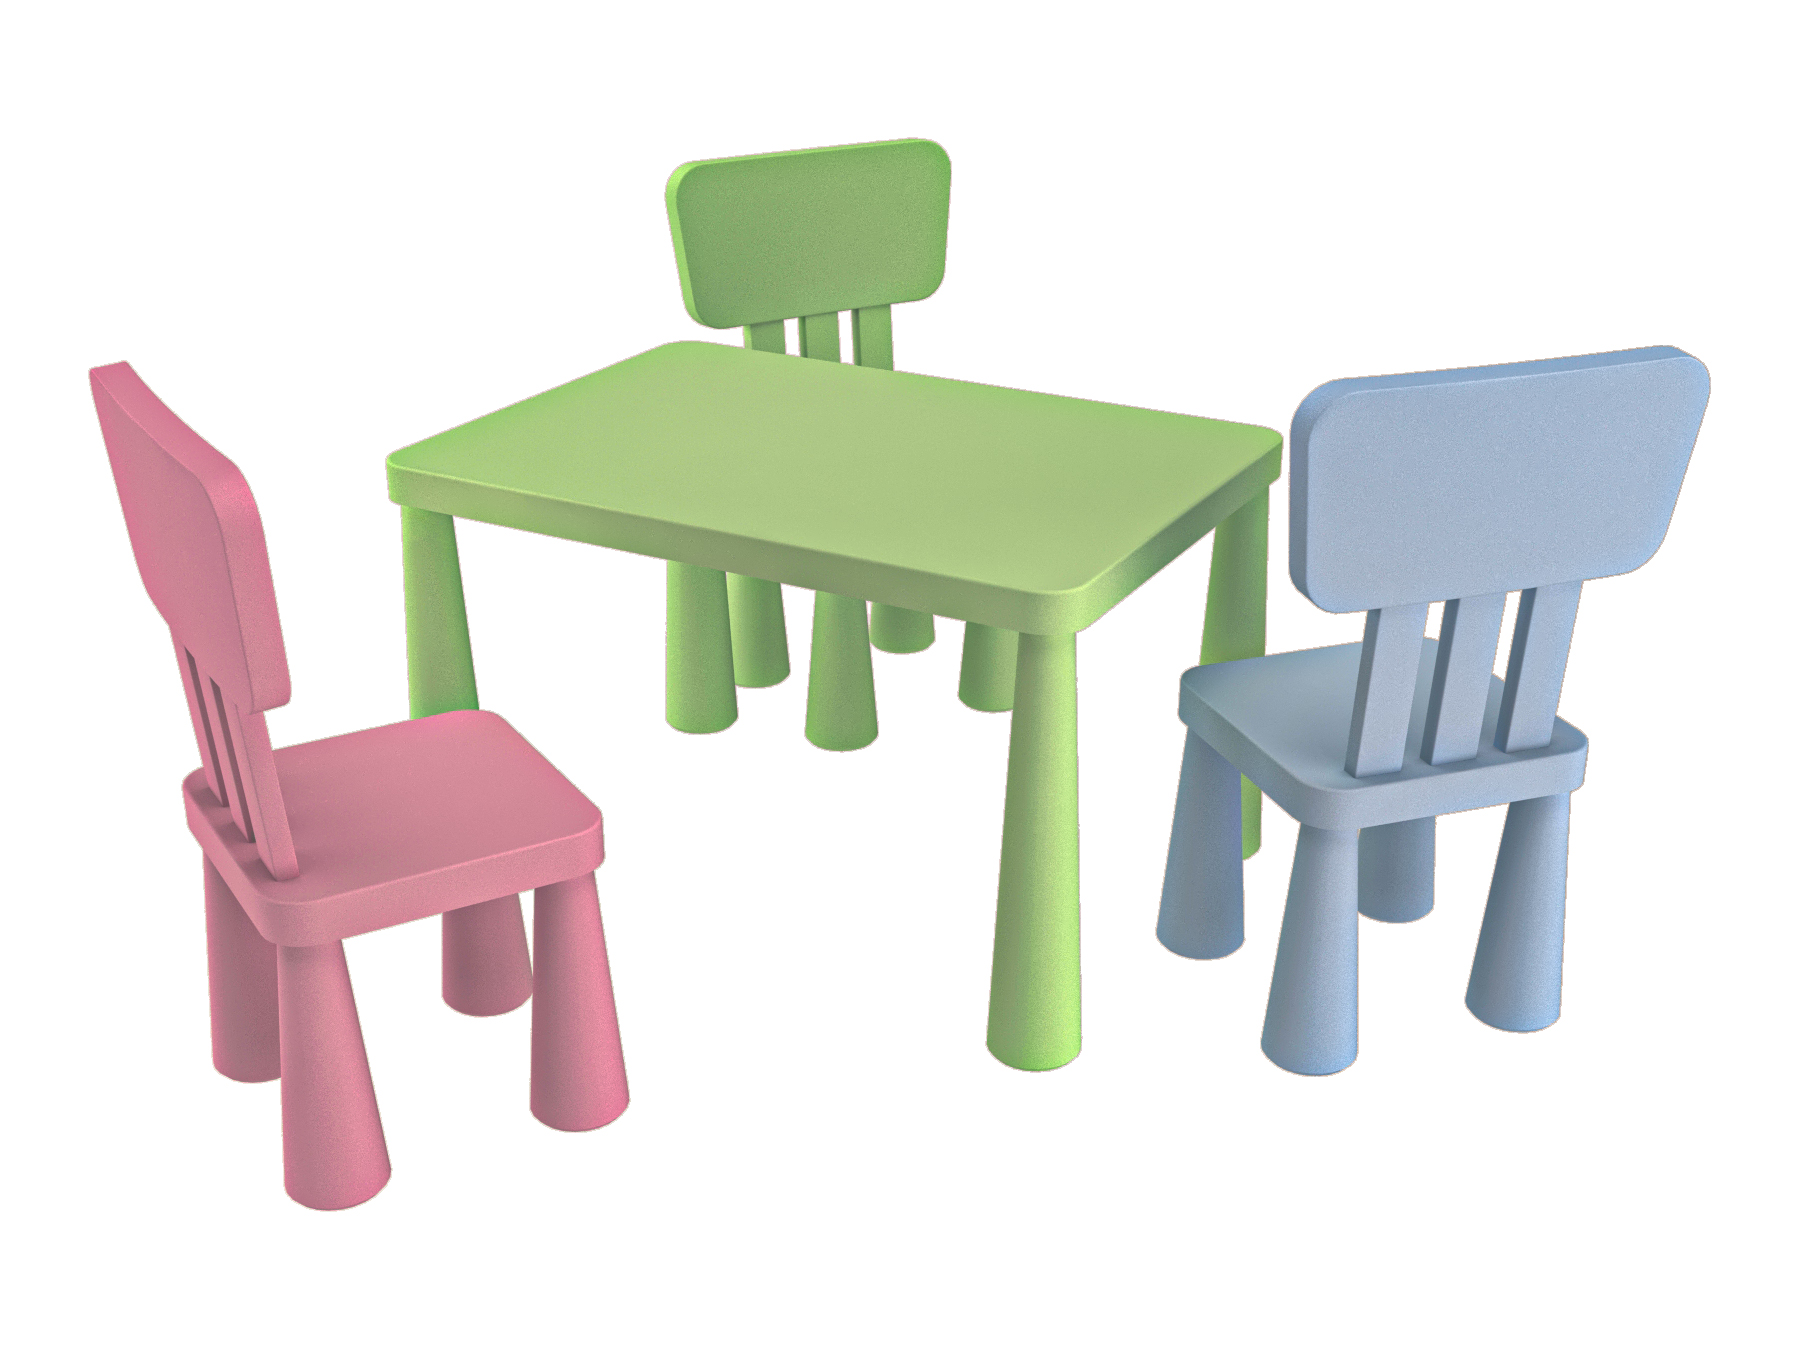 Children's furniture by 3dmodeling | 3DOcean